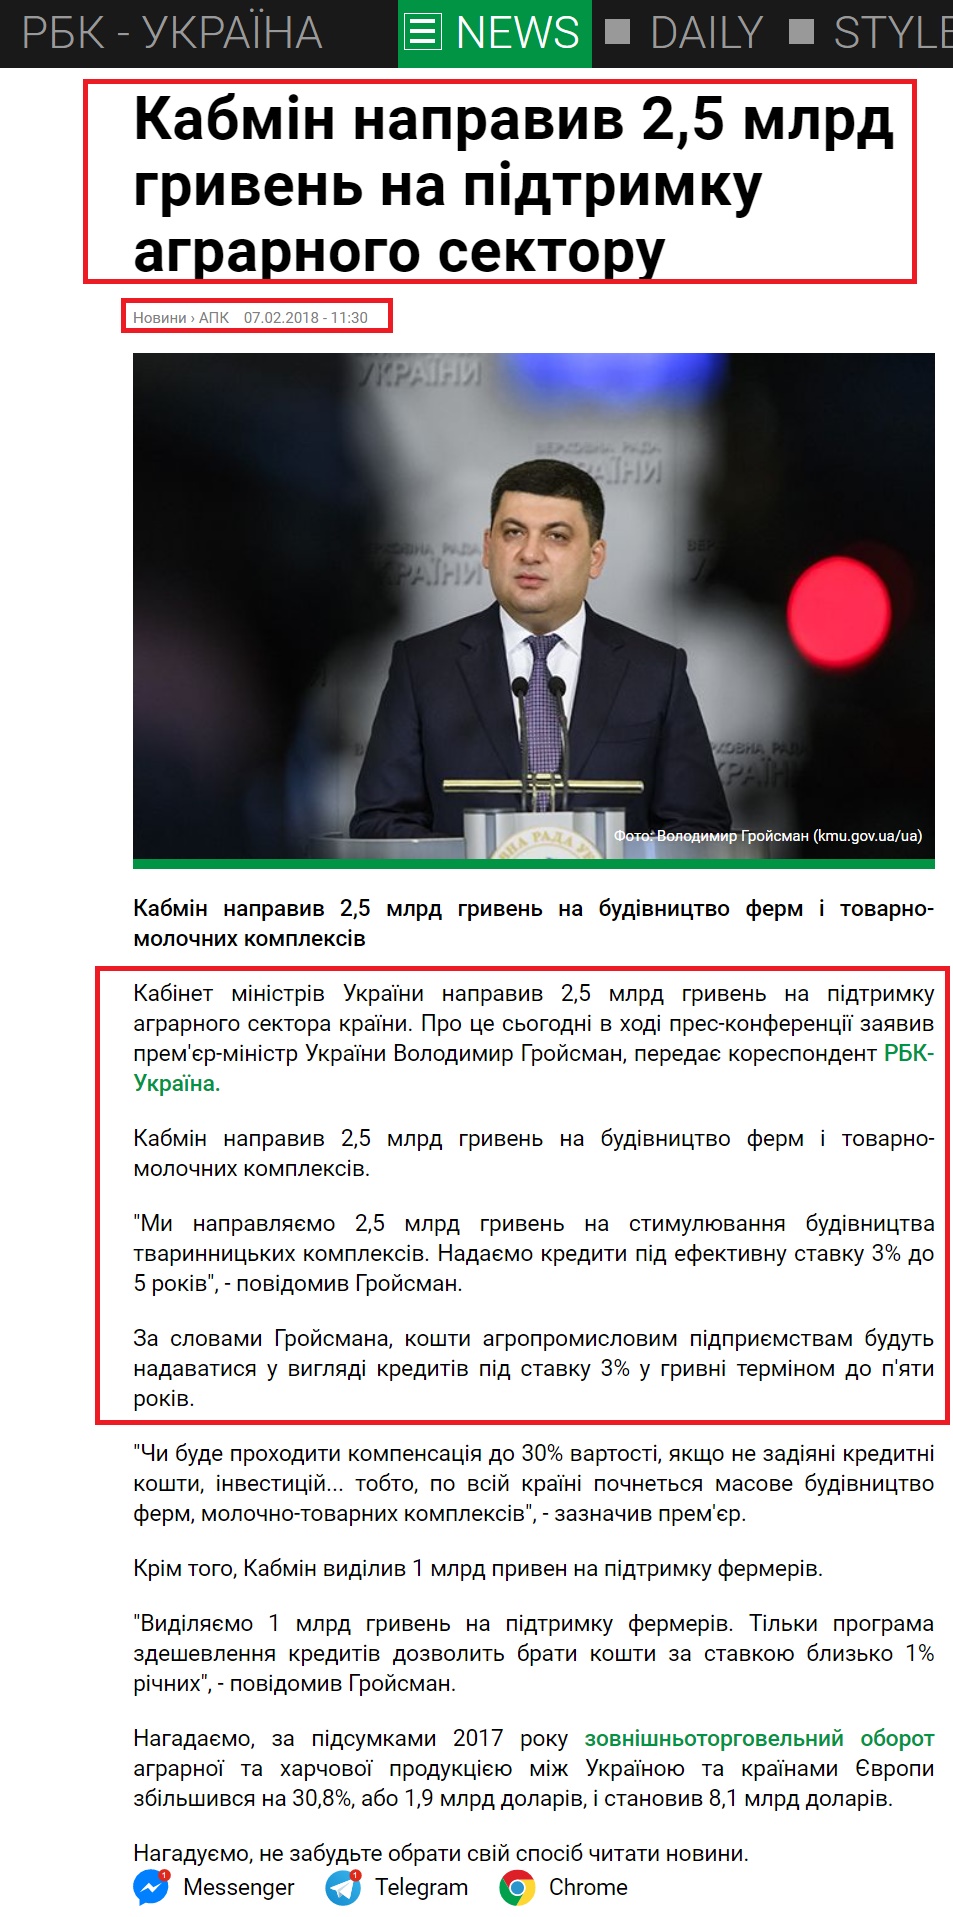 https://www.rbc.ua/ukr/news/kabmin-napravil-2-5-mlrd-griven-podderzhku-1517995797.html